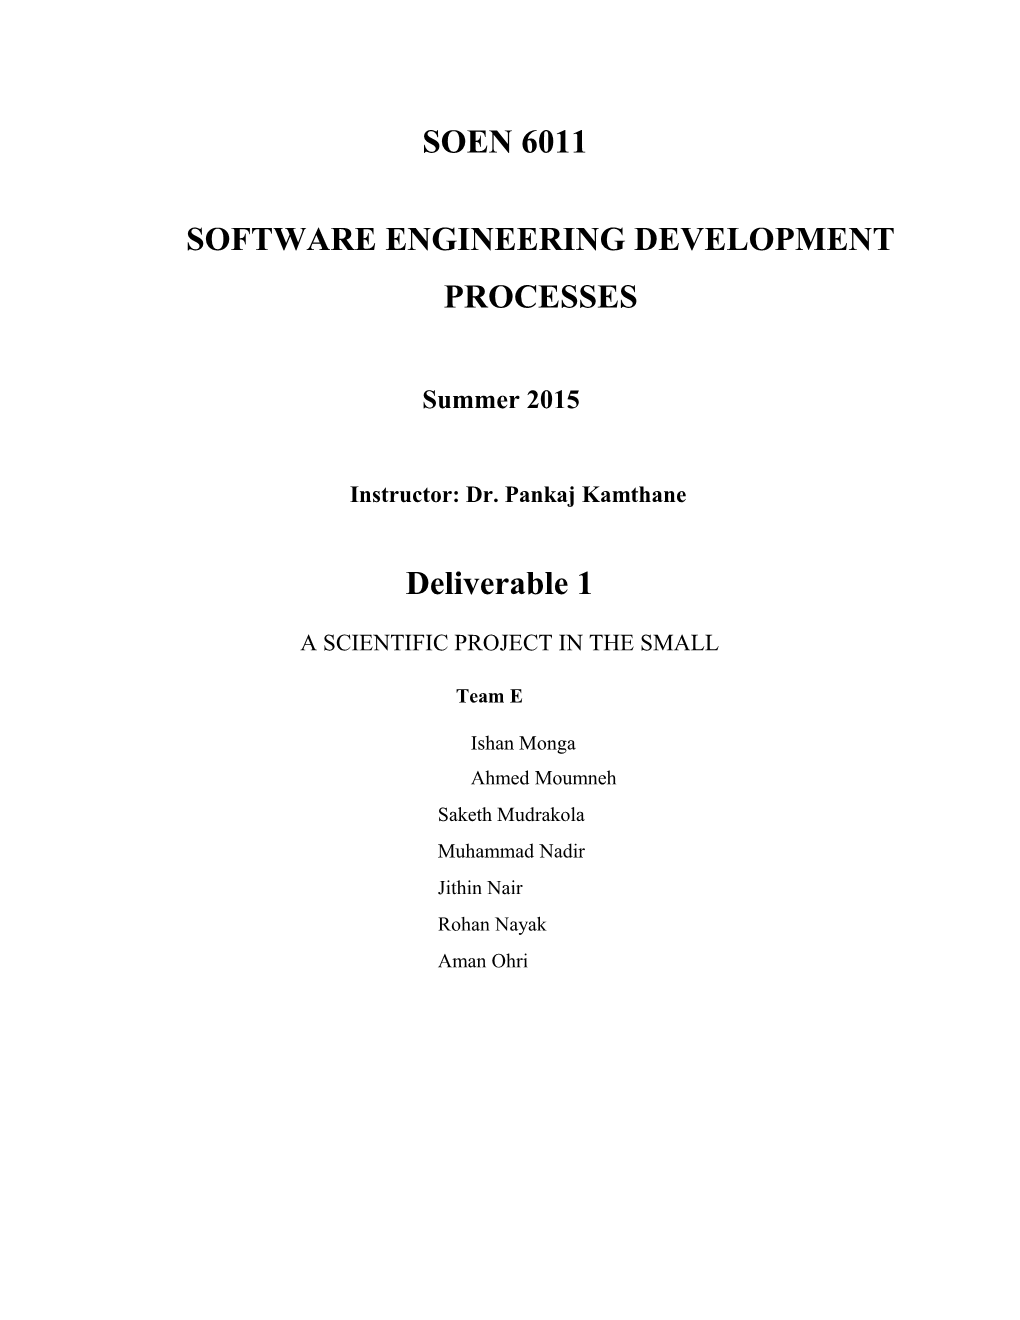 Software Engineering Development Processes